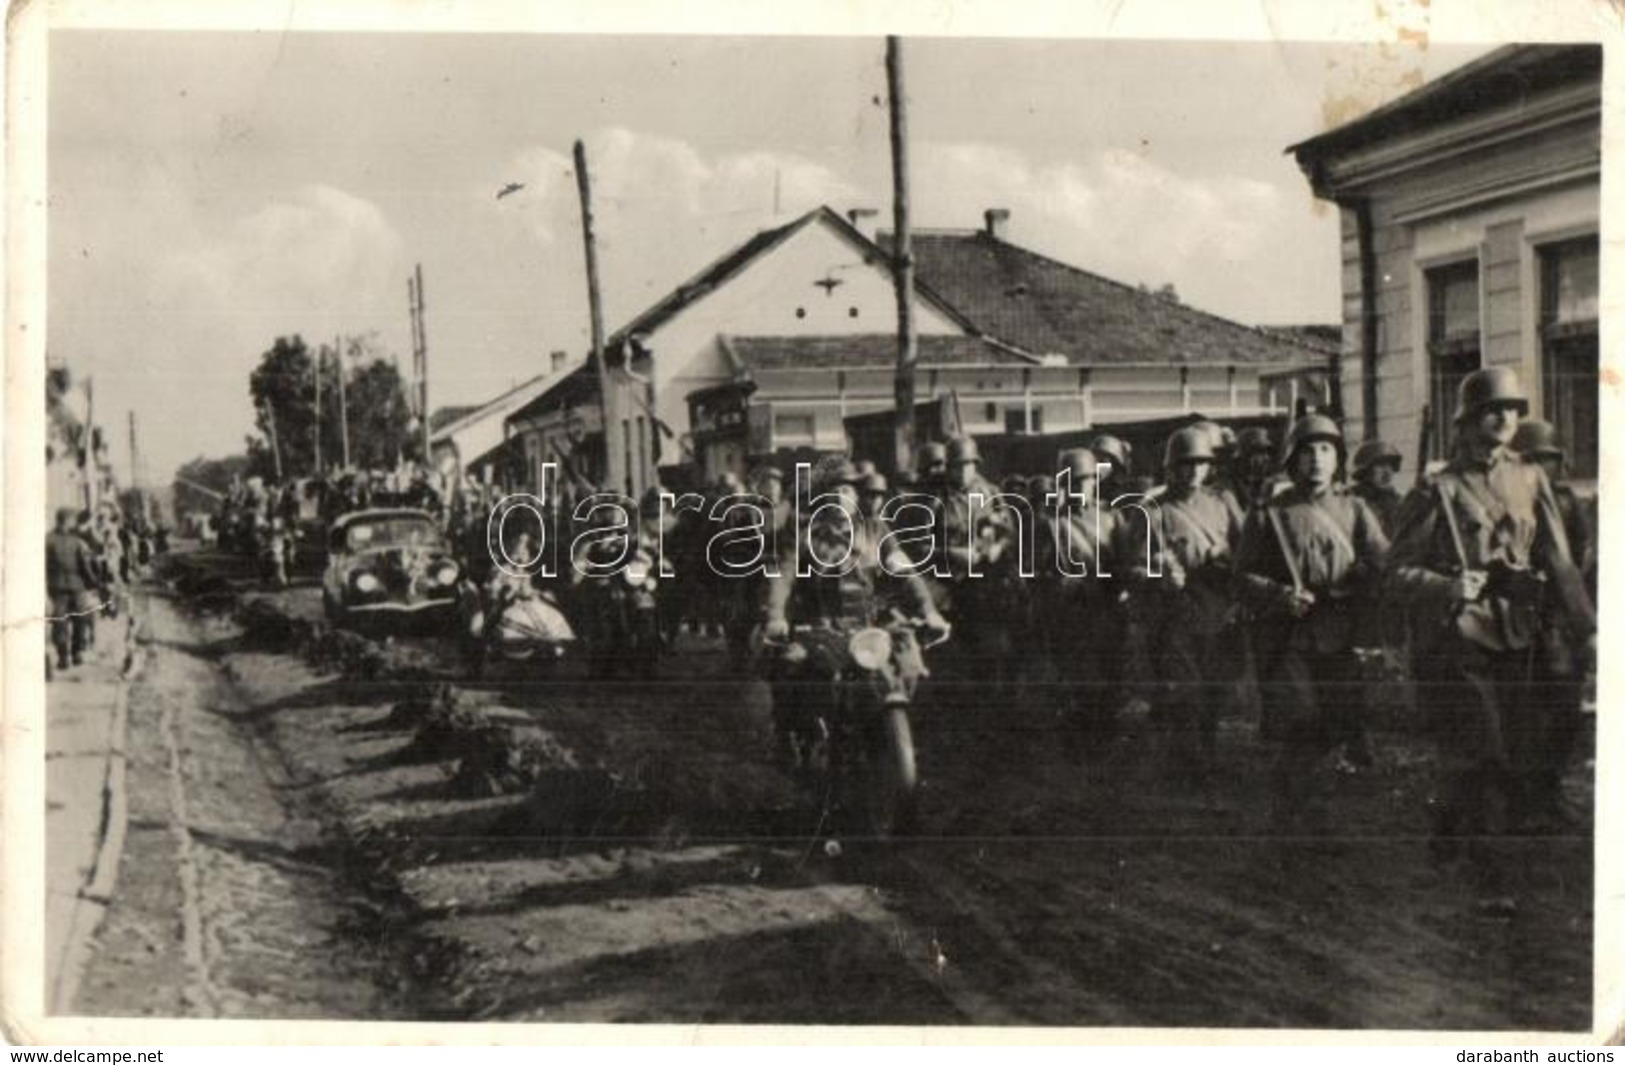 ** T2/T3 1940 Máramarossziget, Sighetu Marmatiei; Bevonulás, Katonák Motorral / Entry Of The Hungarian Troops, Soldiers  - Non Classés